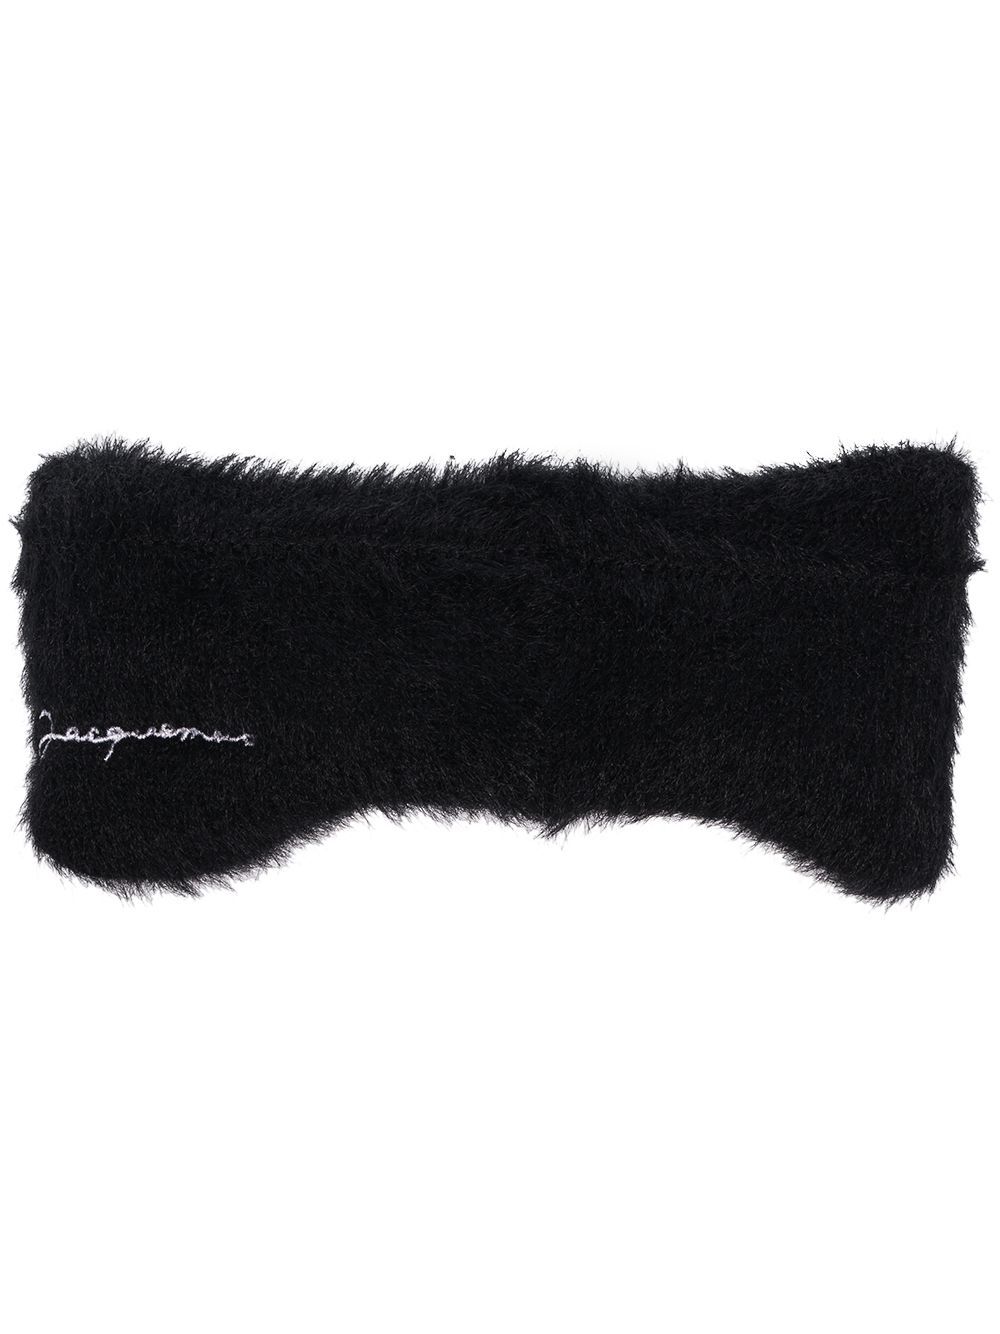 JACQUEMUS Le Bandeau Neve headband in black - Size: OG